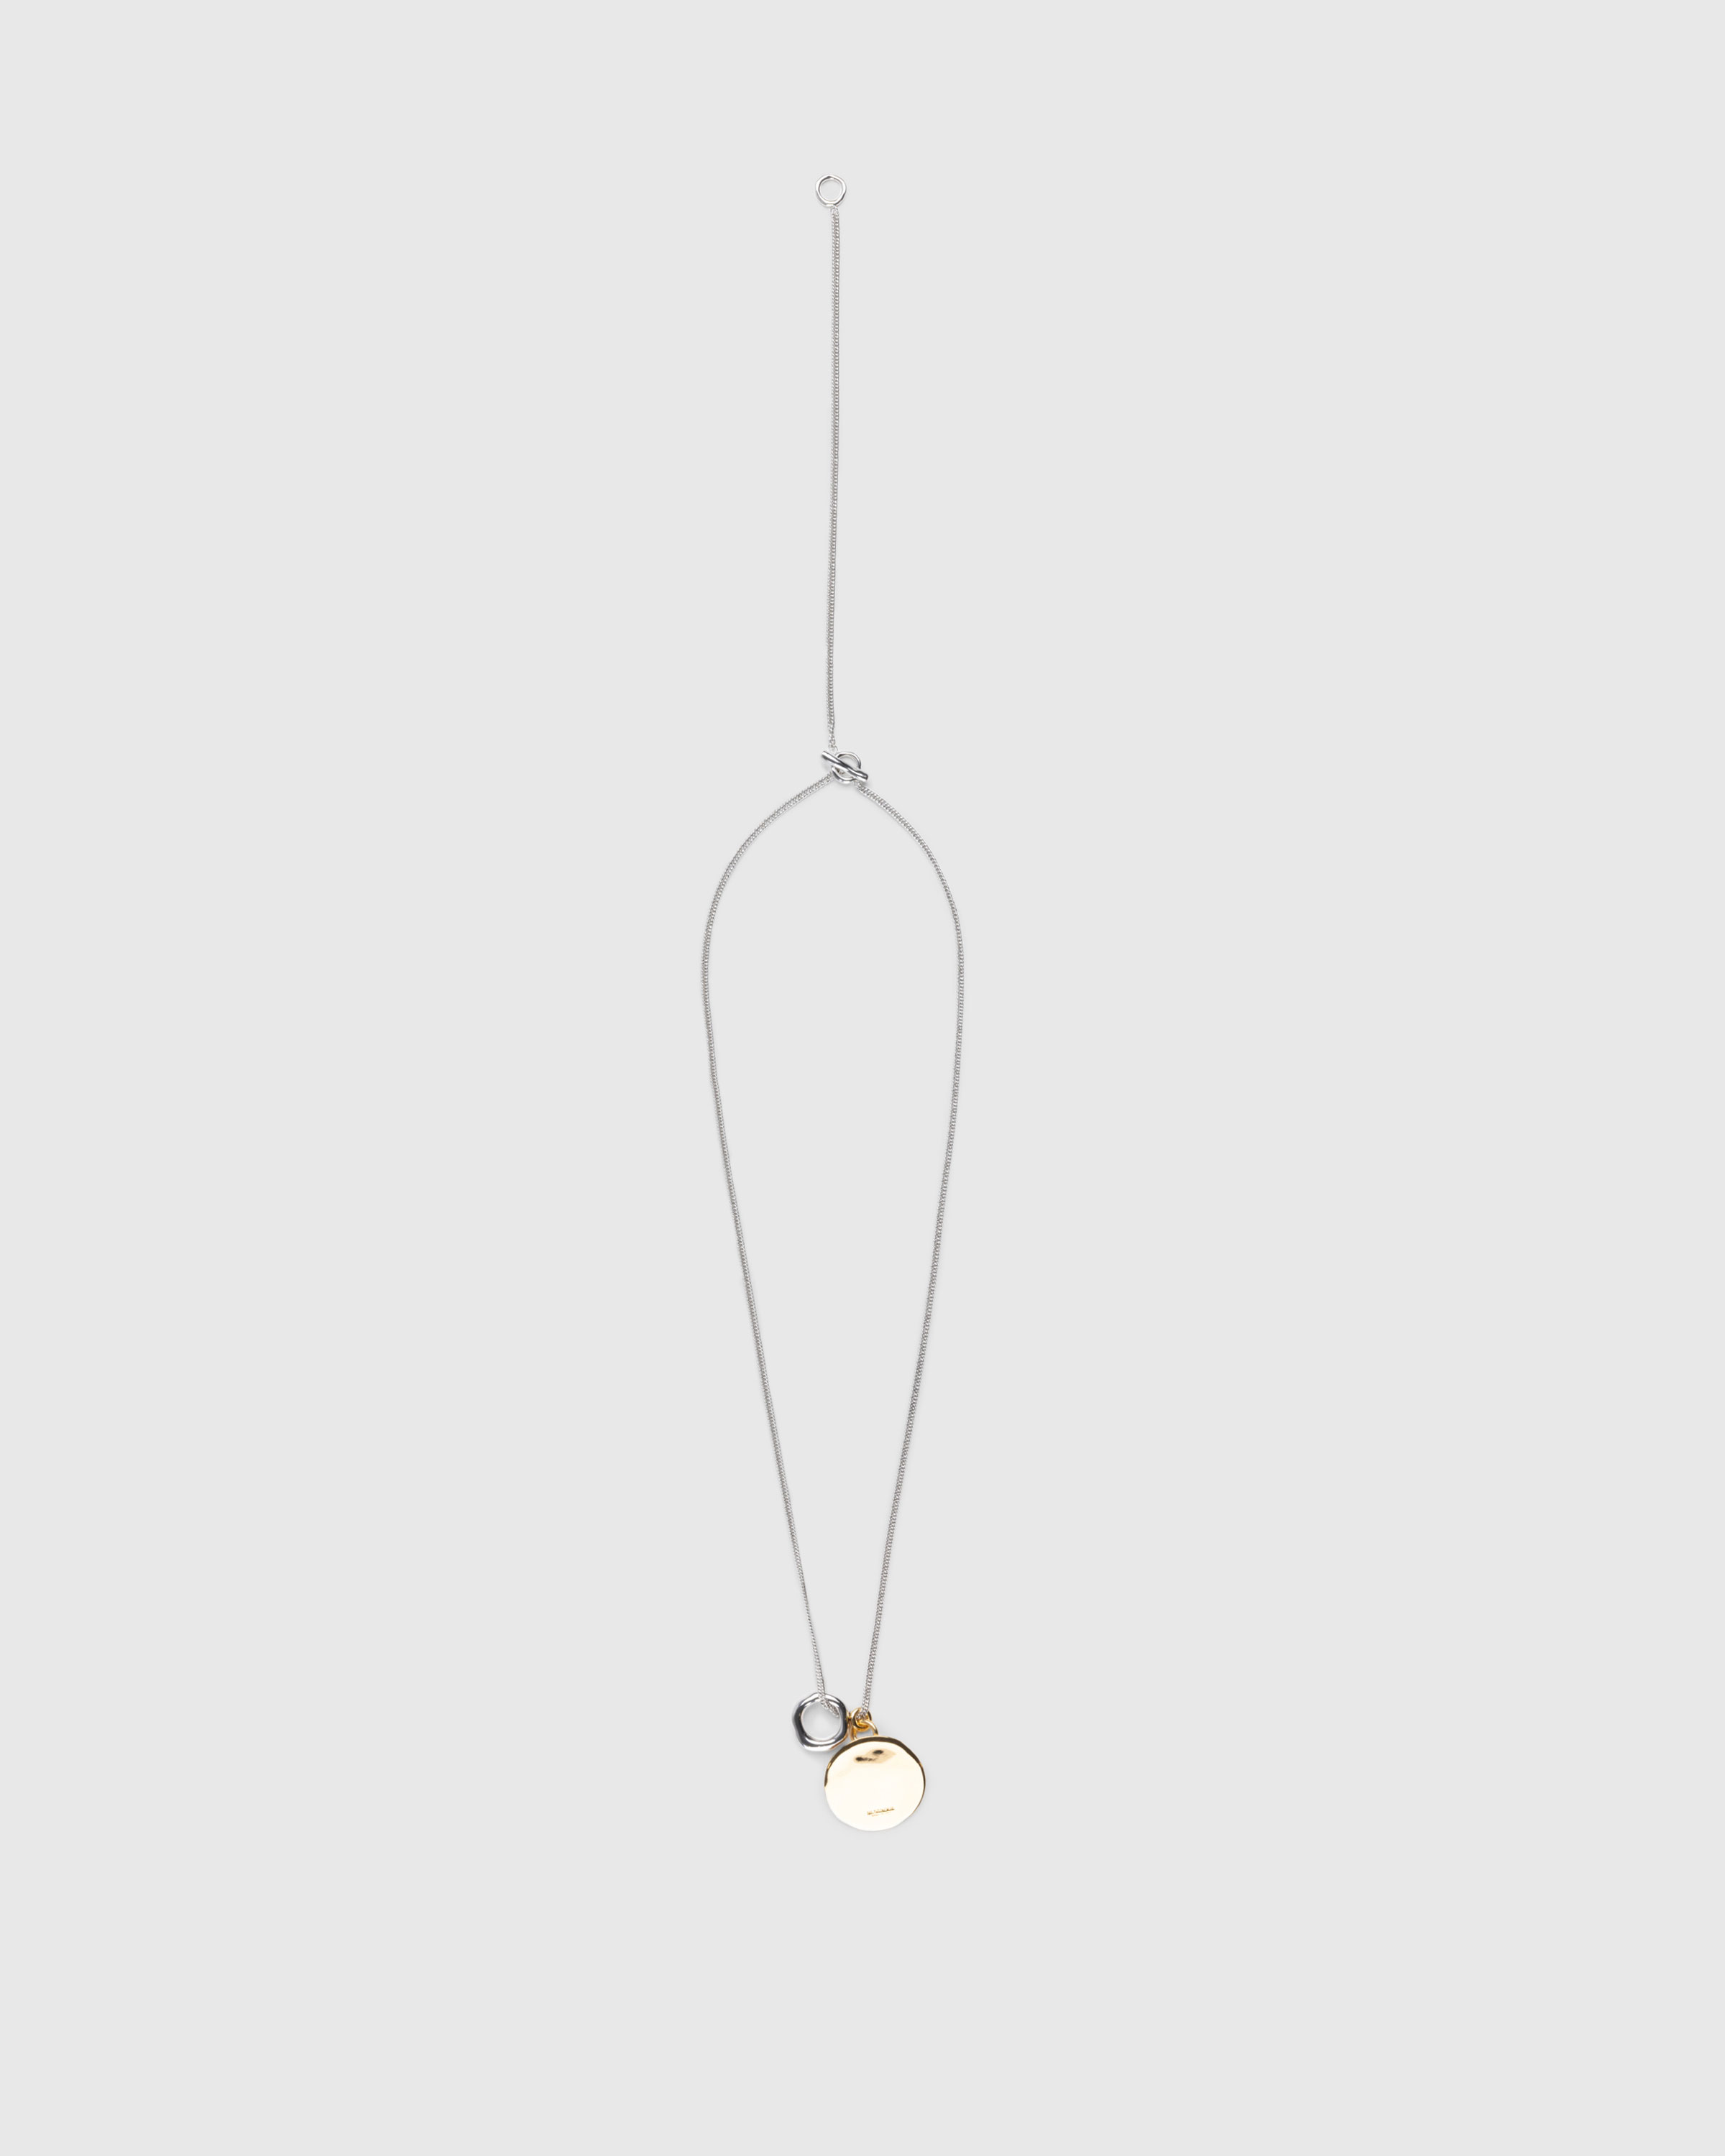 Jil Sander – BM9 Necklace 1 Gold/Silver - Earrings - Gold - Image 1